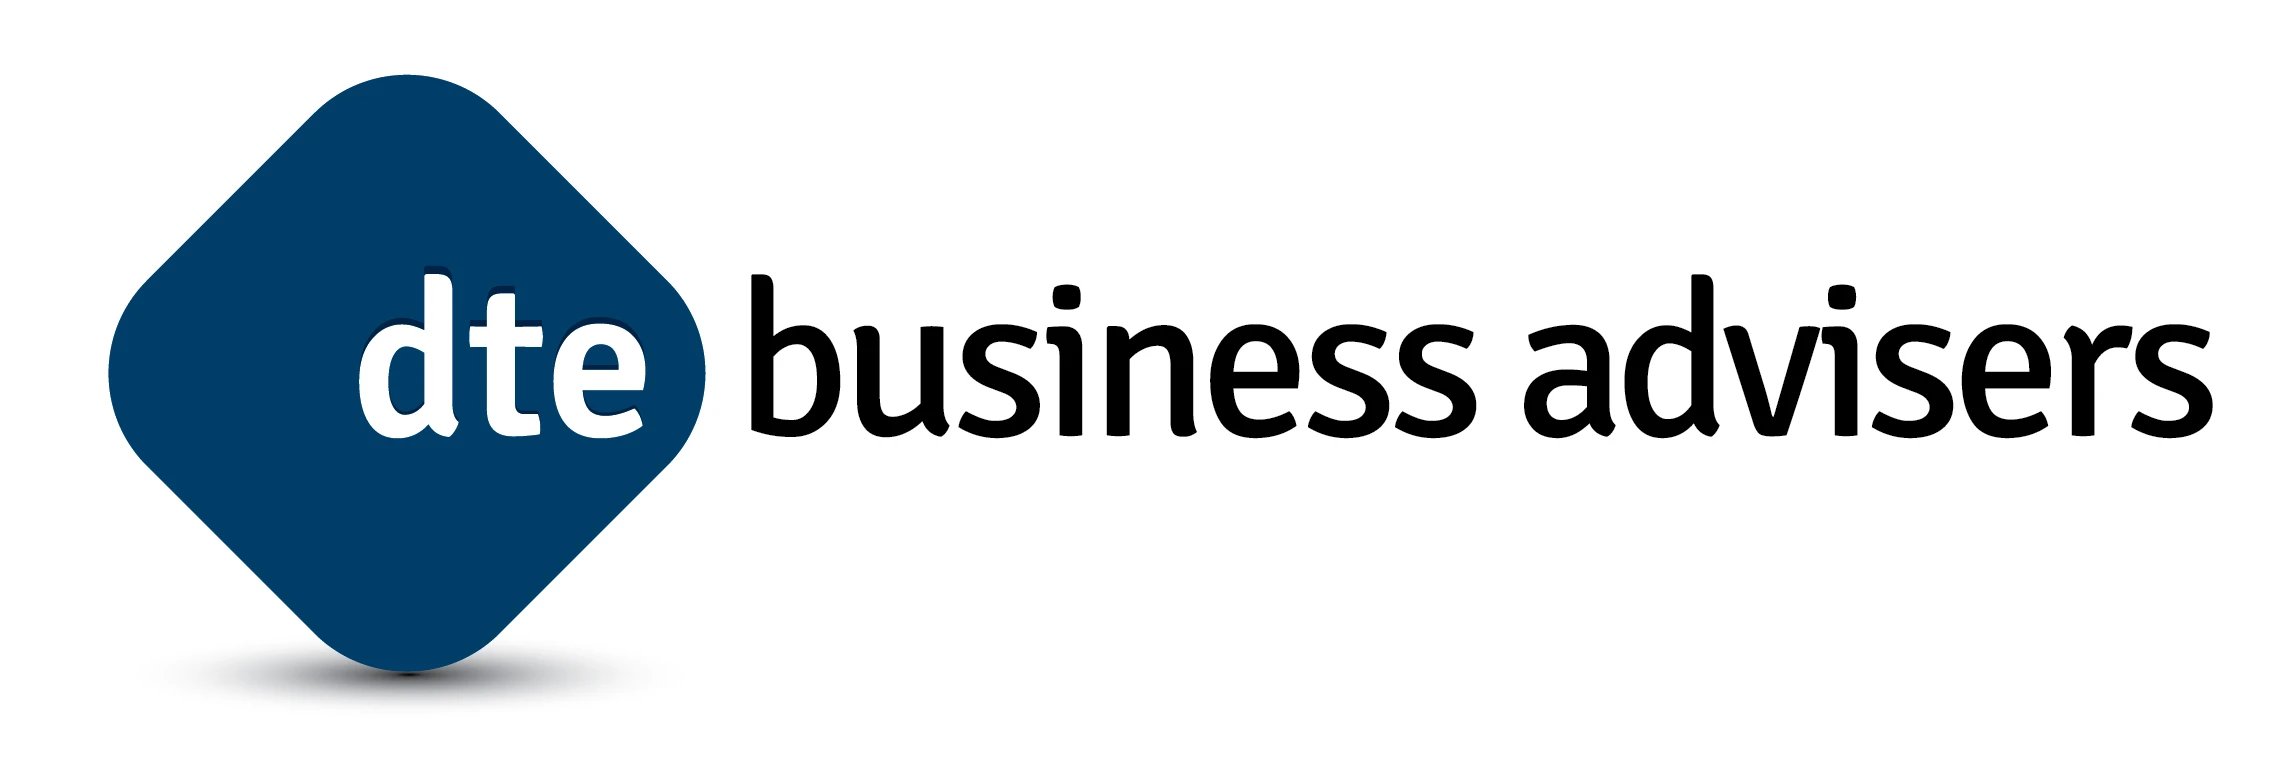 DTE Business Advisers Logo